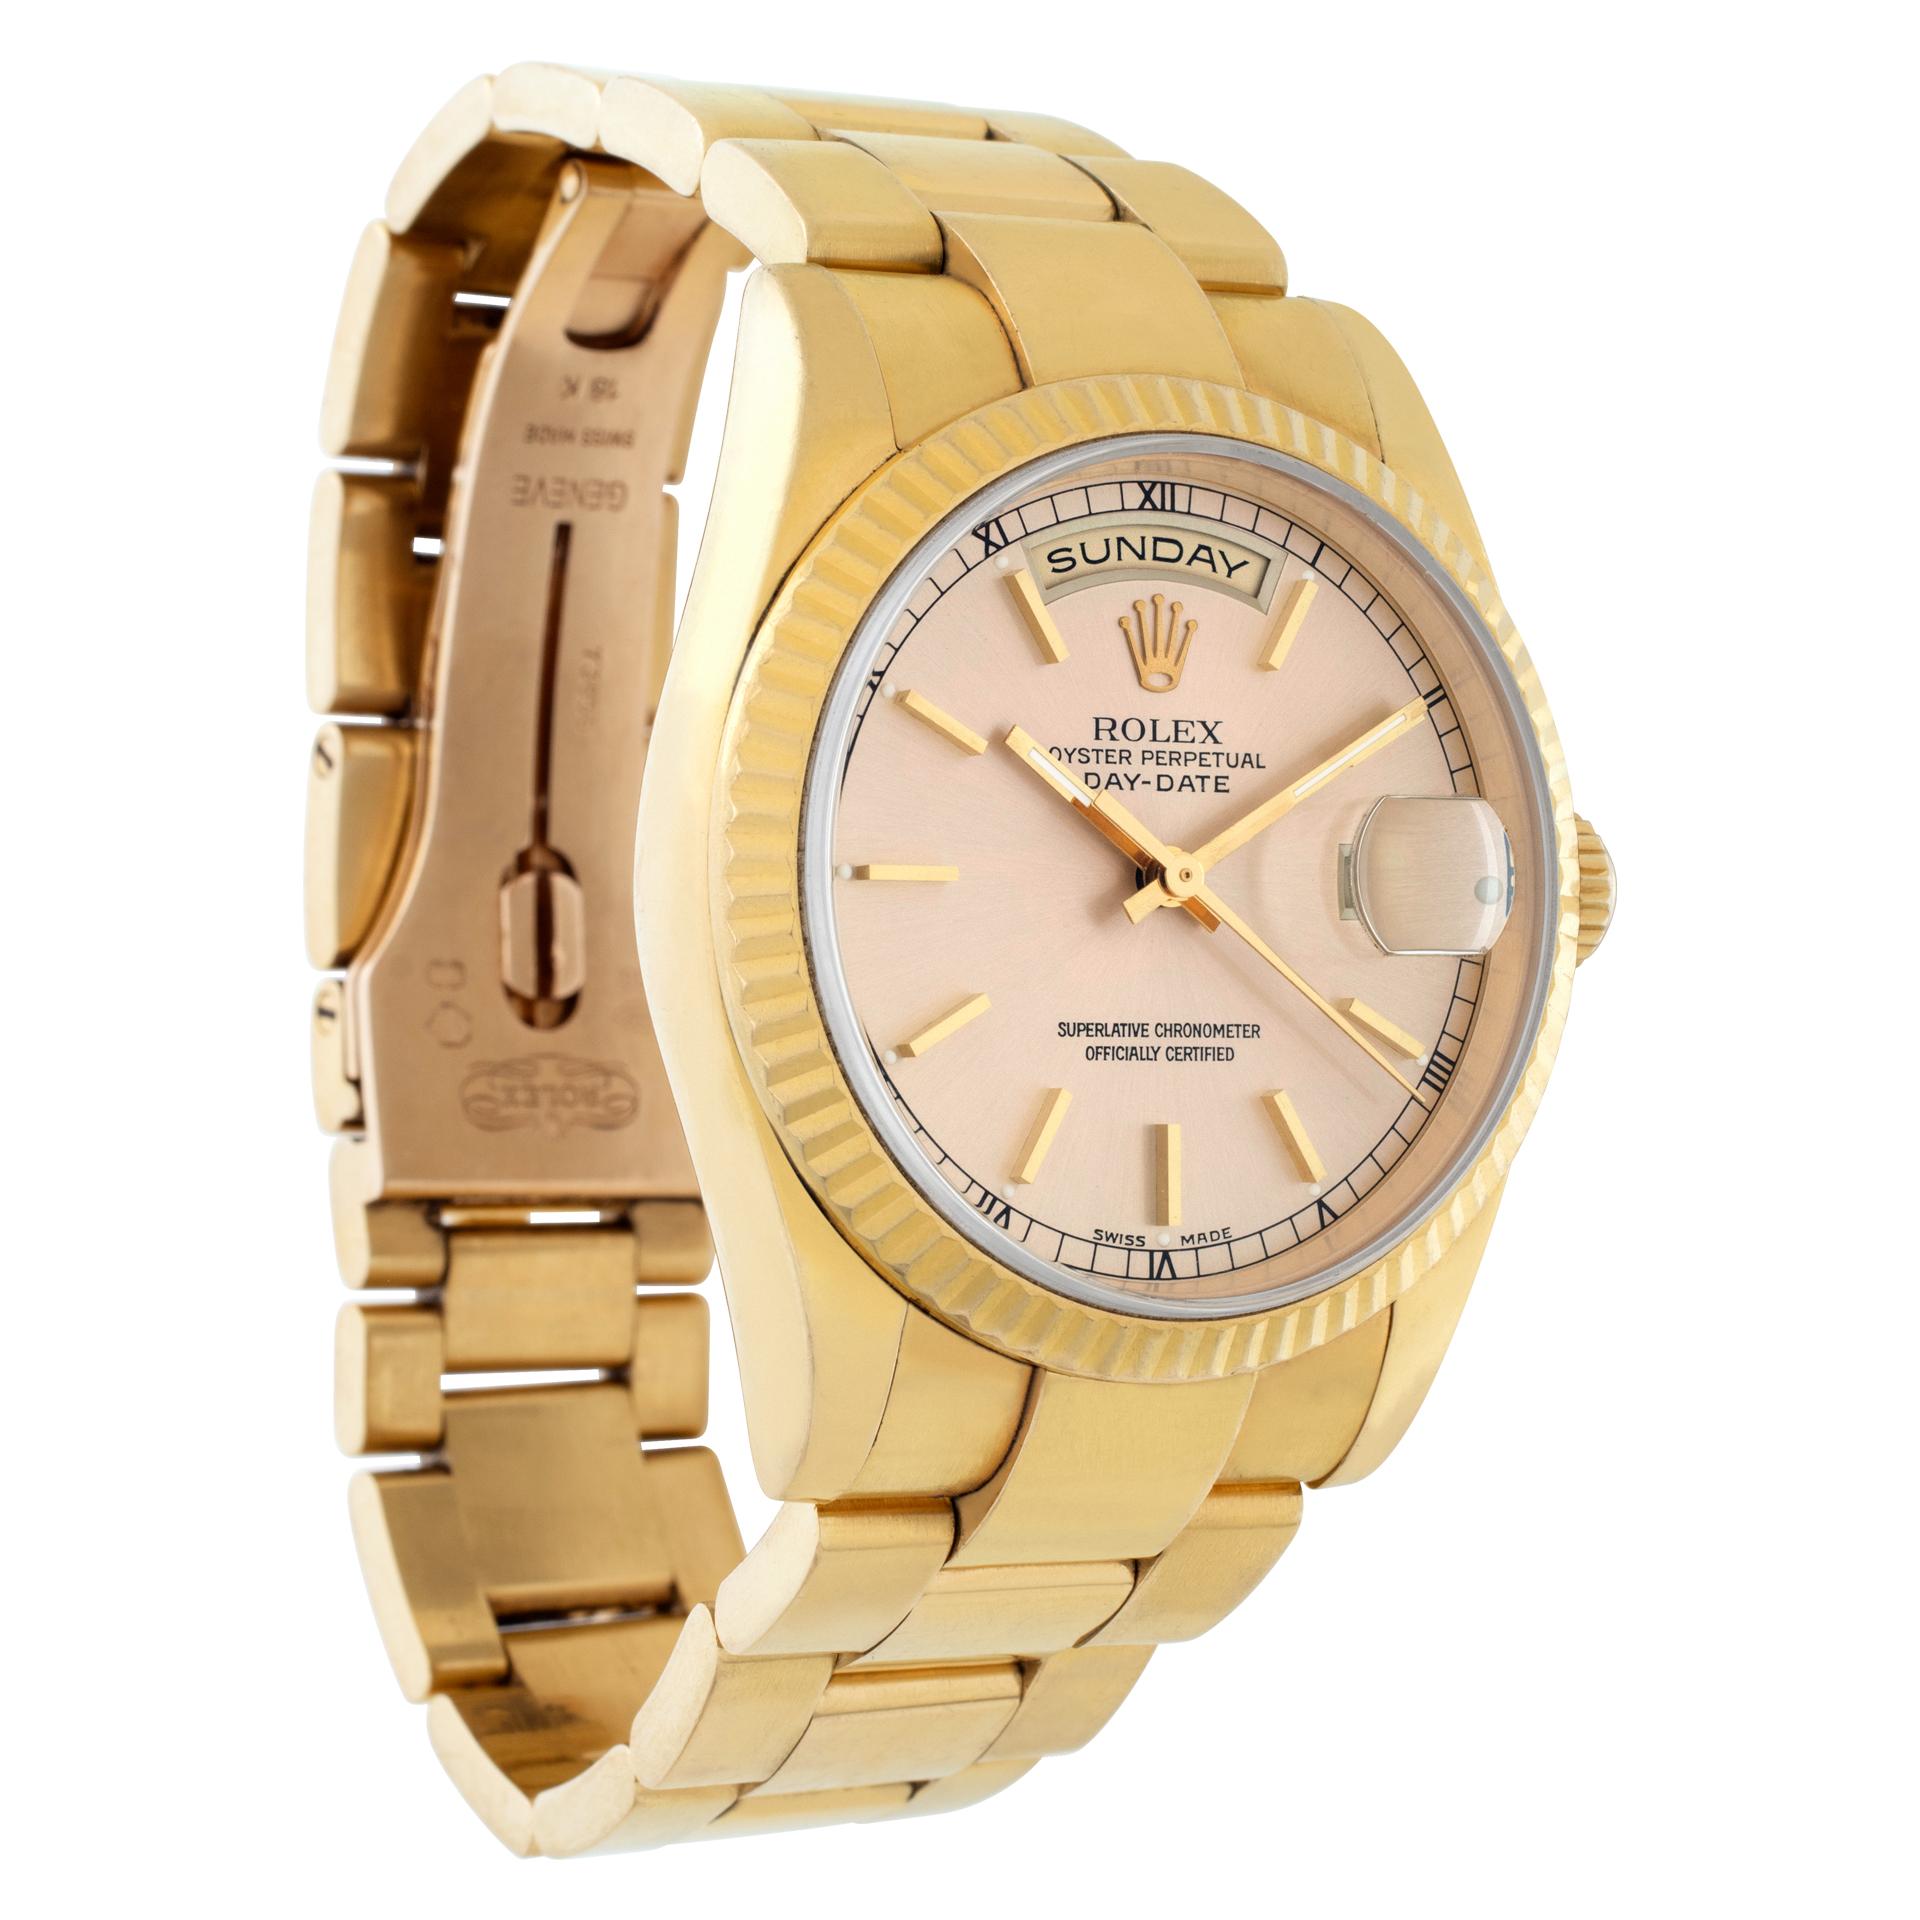 Rolex Day-Date 18k Gold Auto Wristwatch Ref 118238 In Excellent Condition For Sale In Surfside, FL